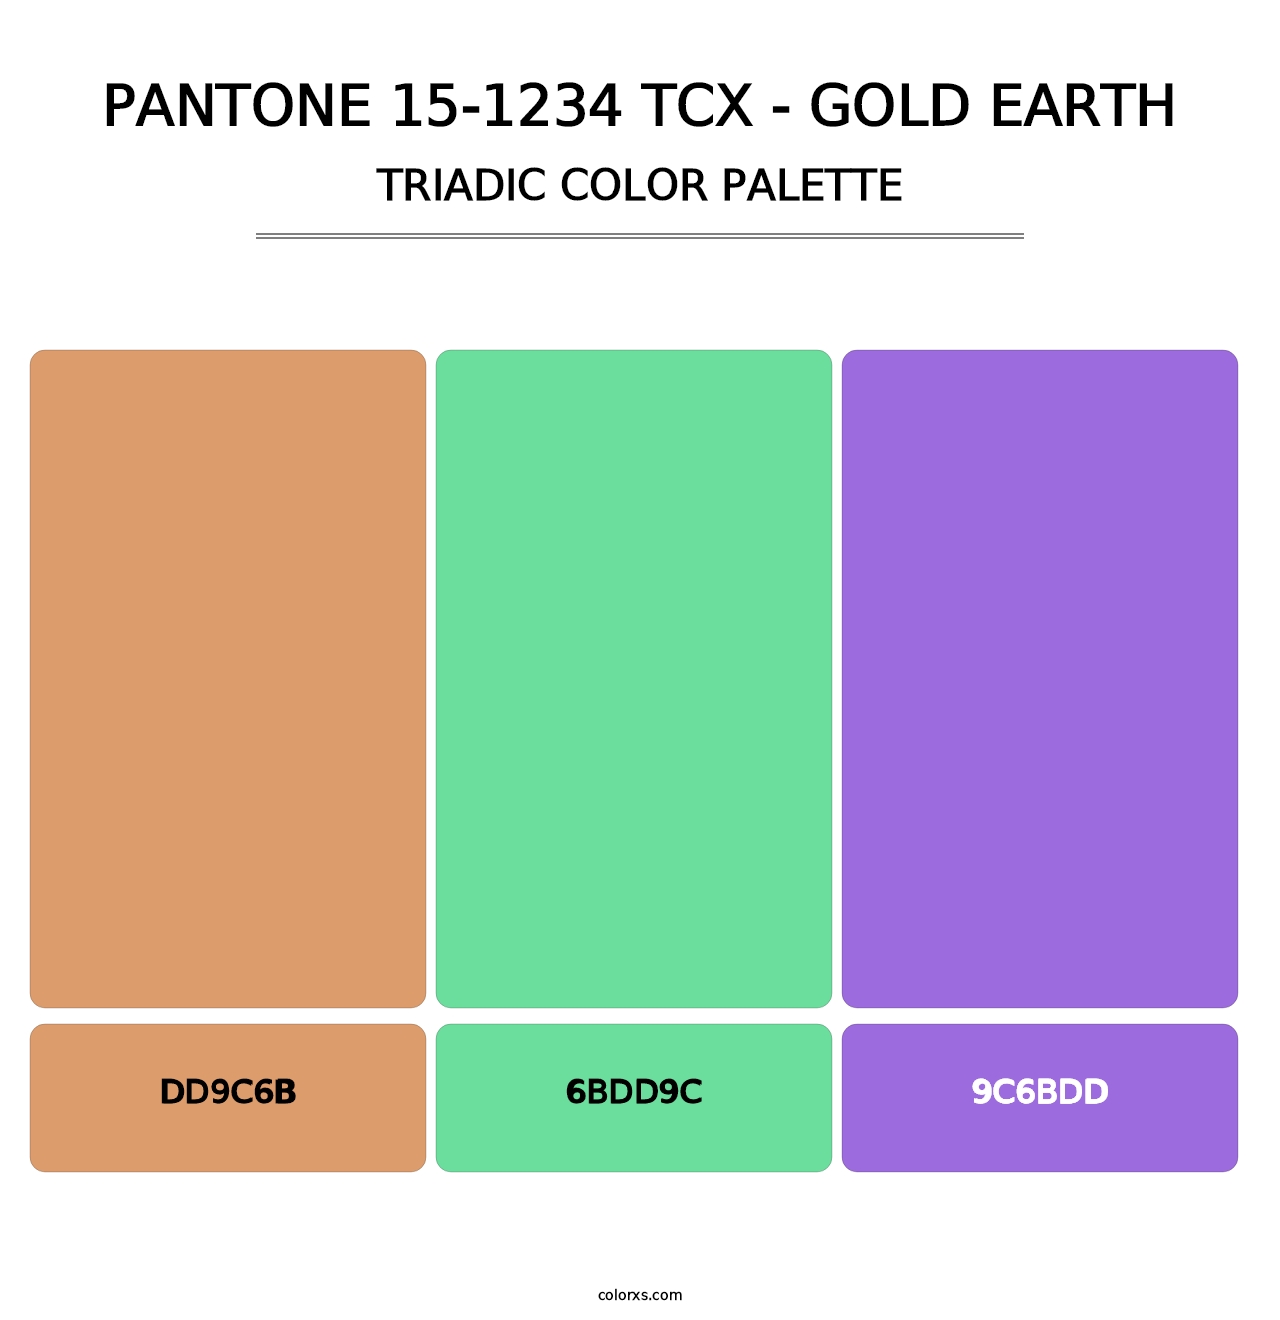 PANTONE 15-1234 TCX - Gold Earth - Triadic Color Palette